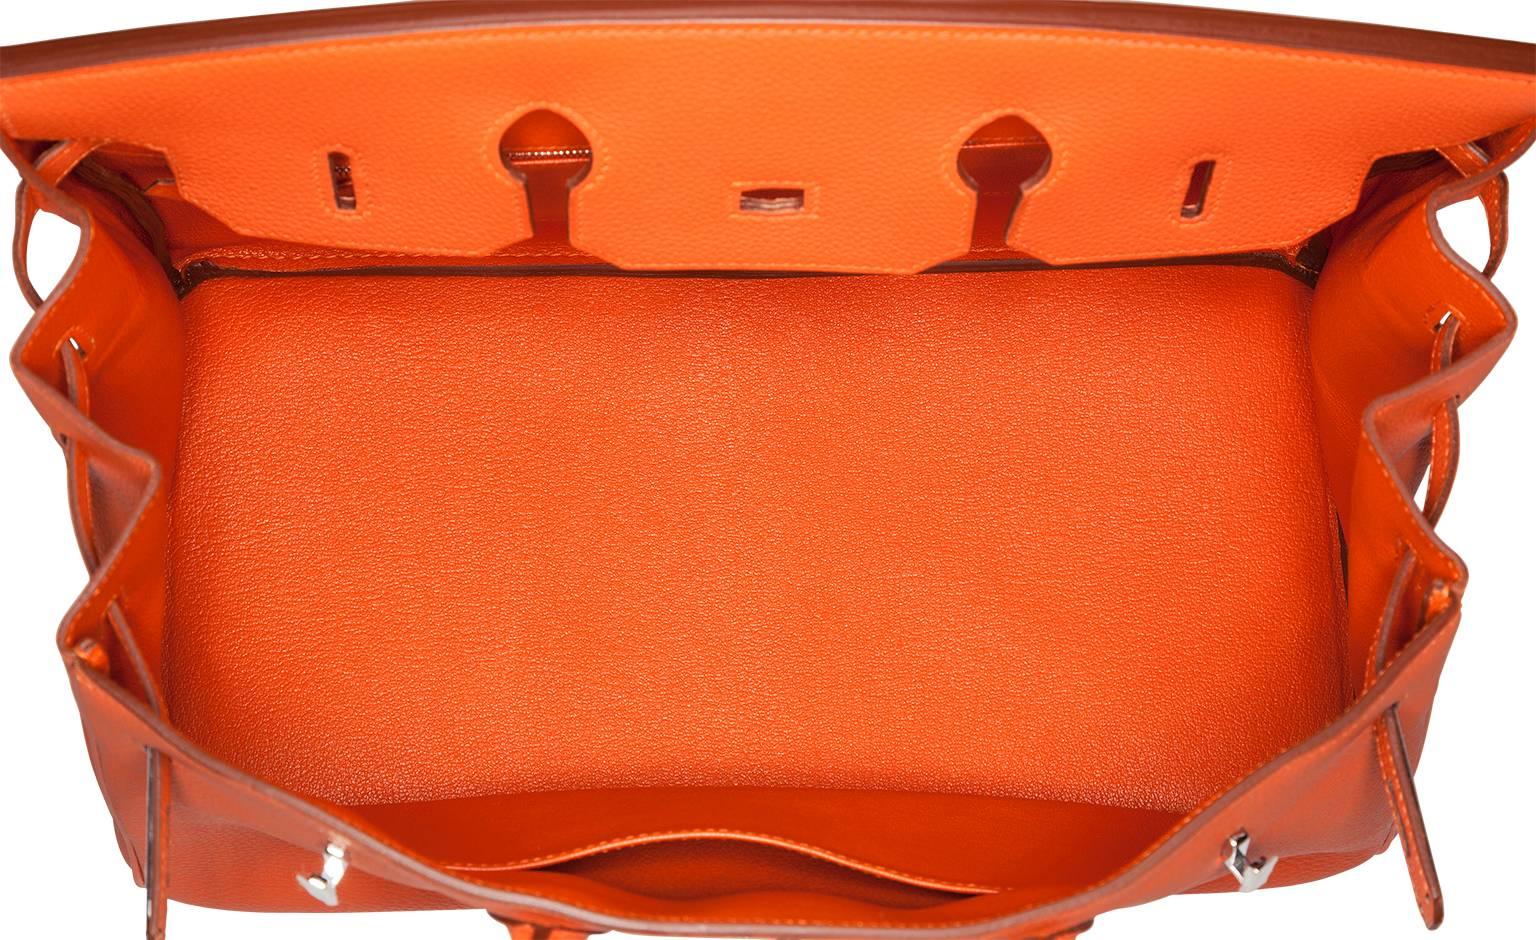 Hermes 35cm Orange Poppy Togo Leather Birkin Bag with Palladium Hardware For Sale 1